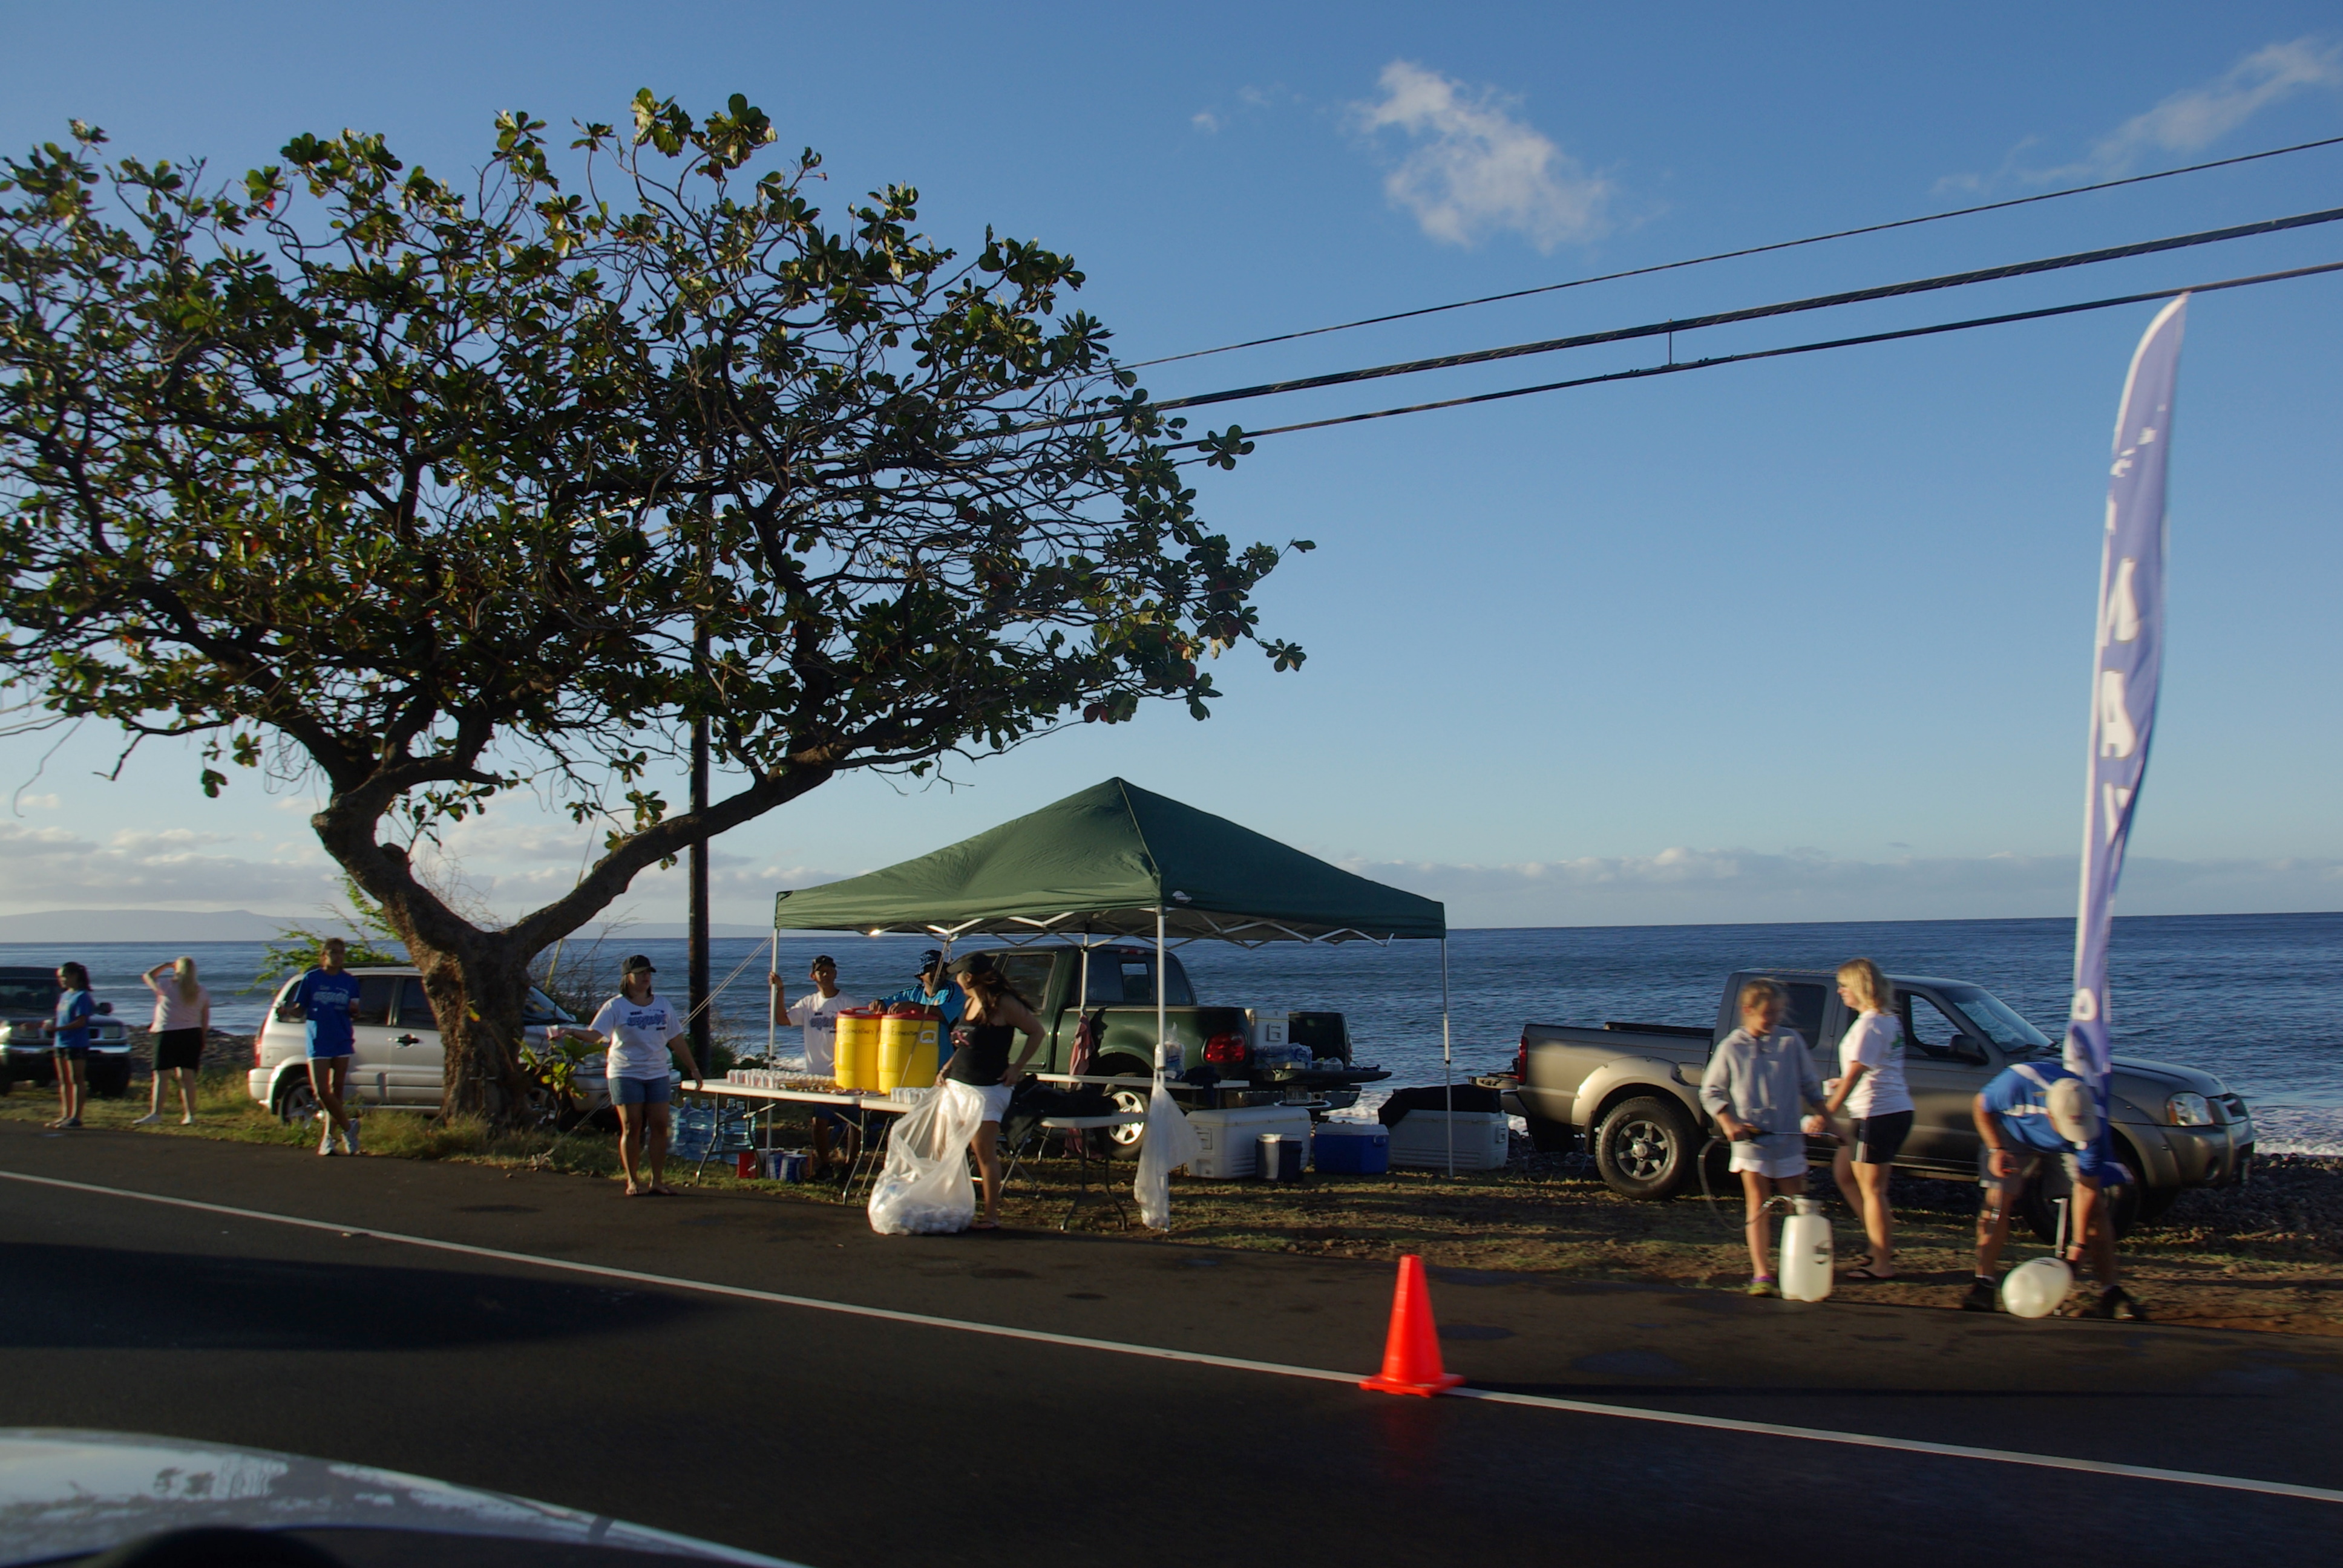 Maui Oceanfront Marathon